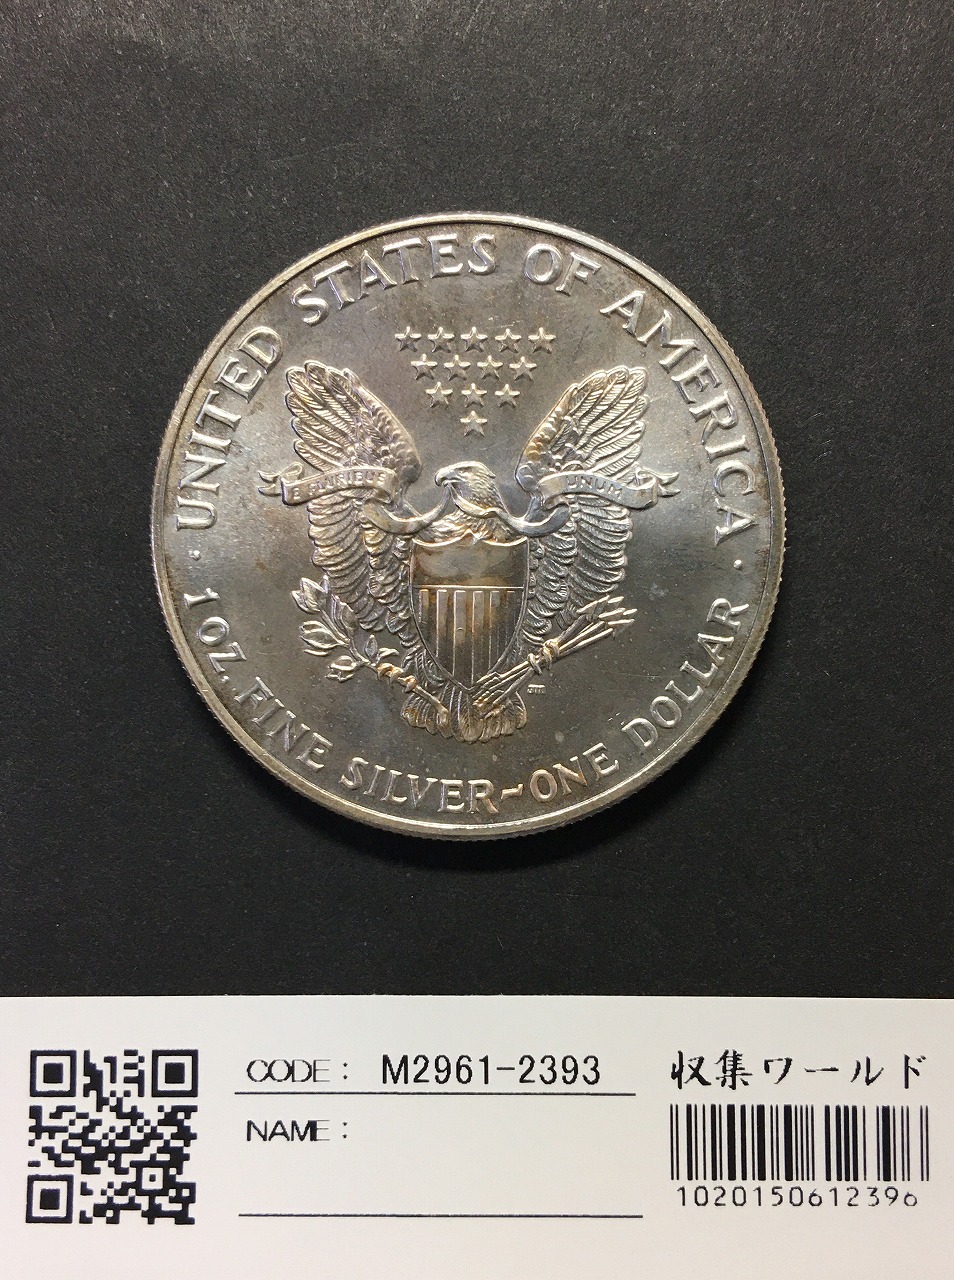 USA イーグル 1ドル銀貨 1990年銘 自由女神 LIBERTY 1オンス 未使用 